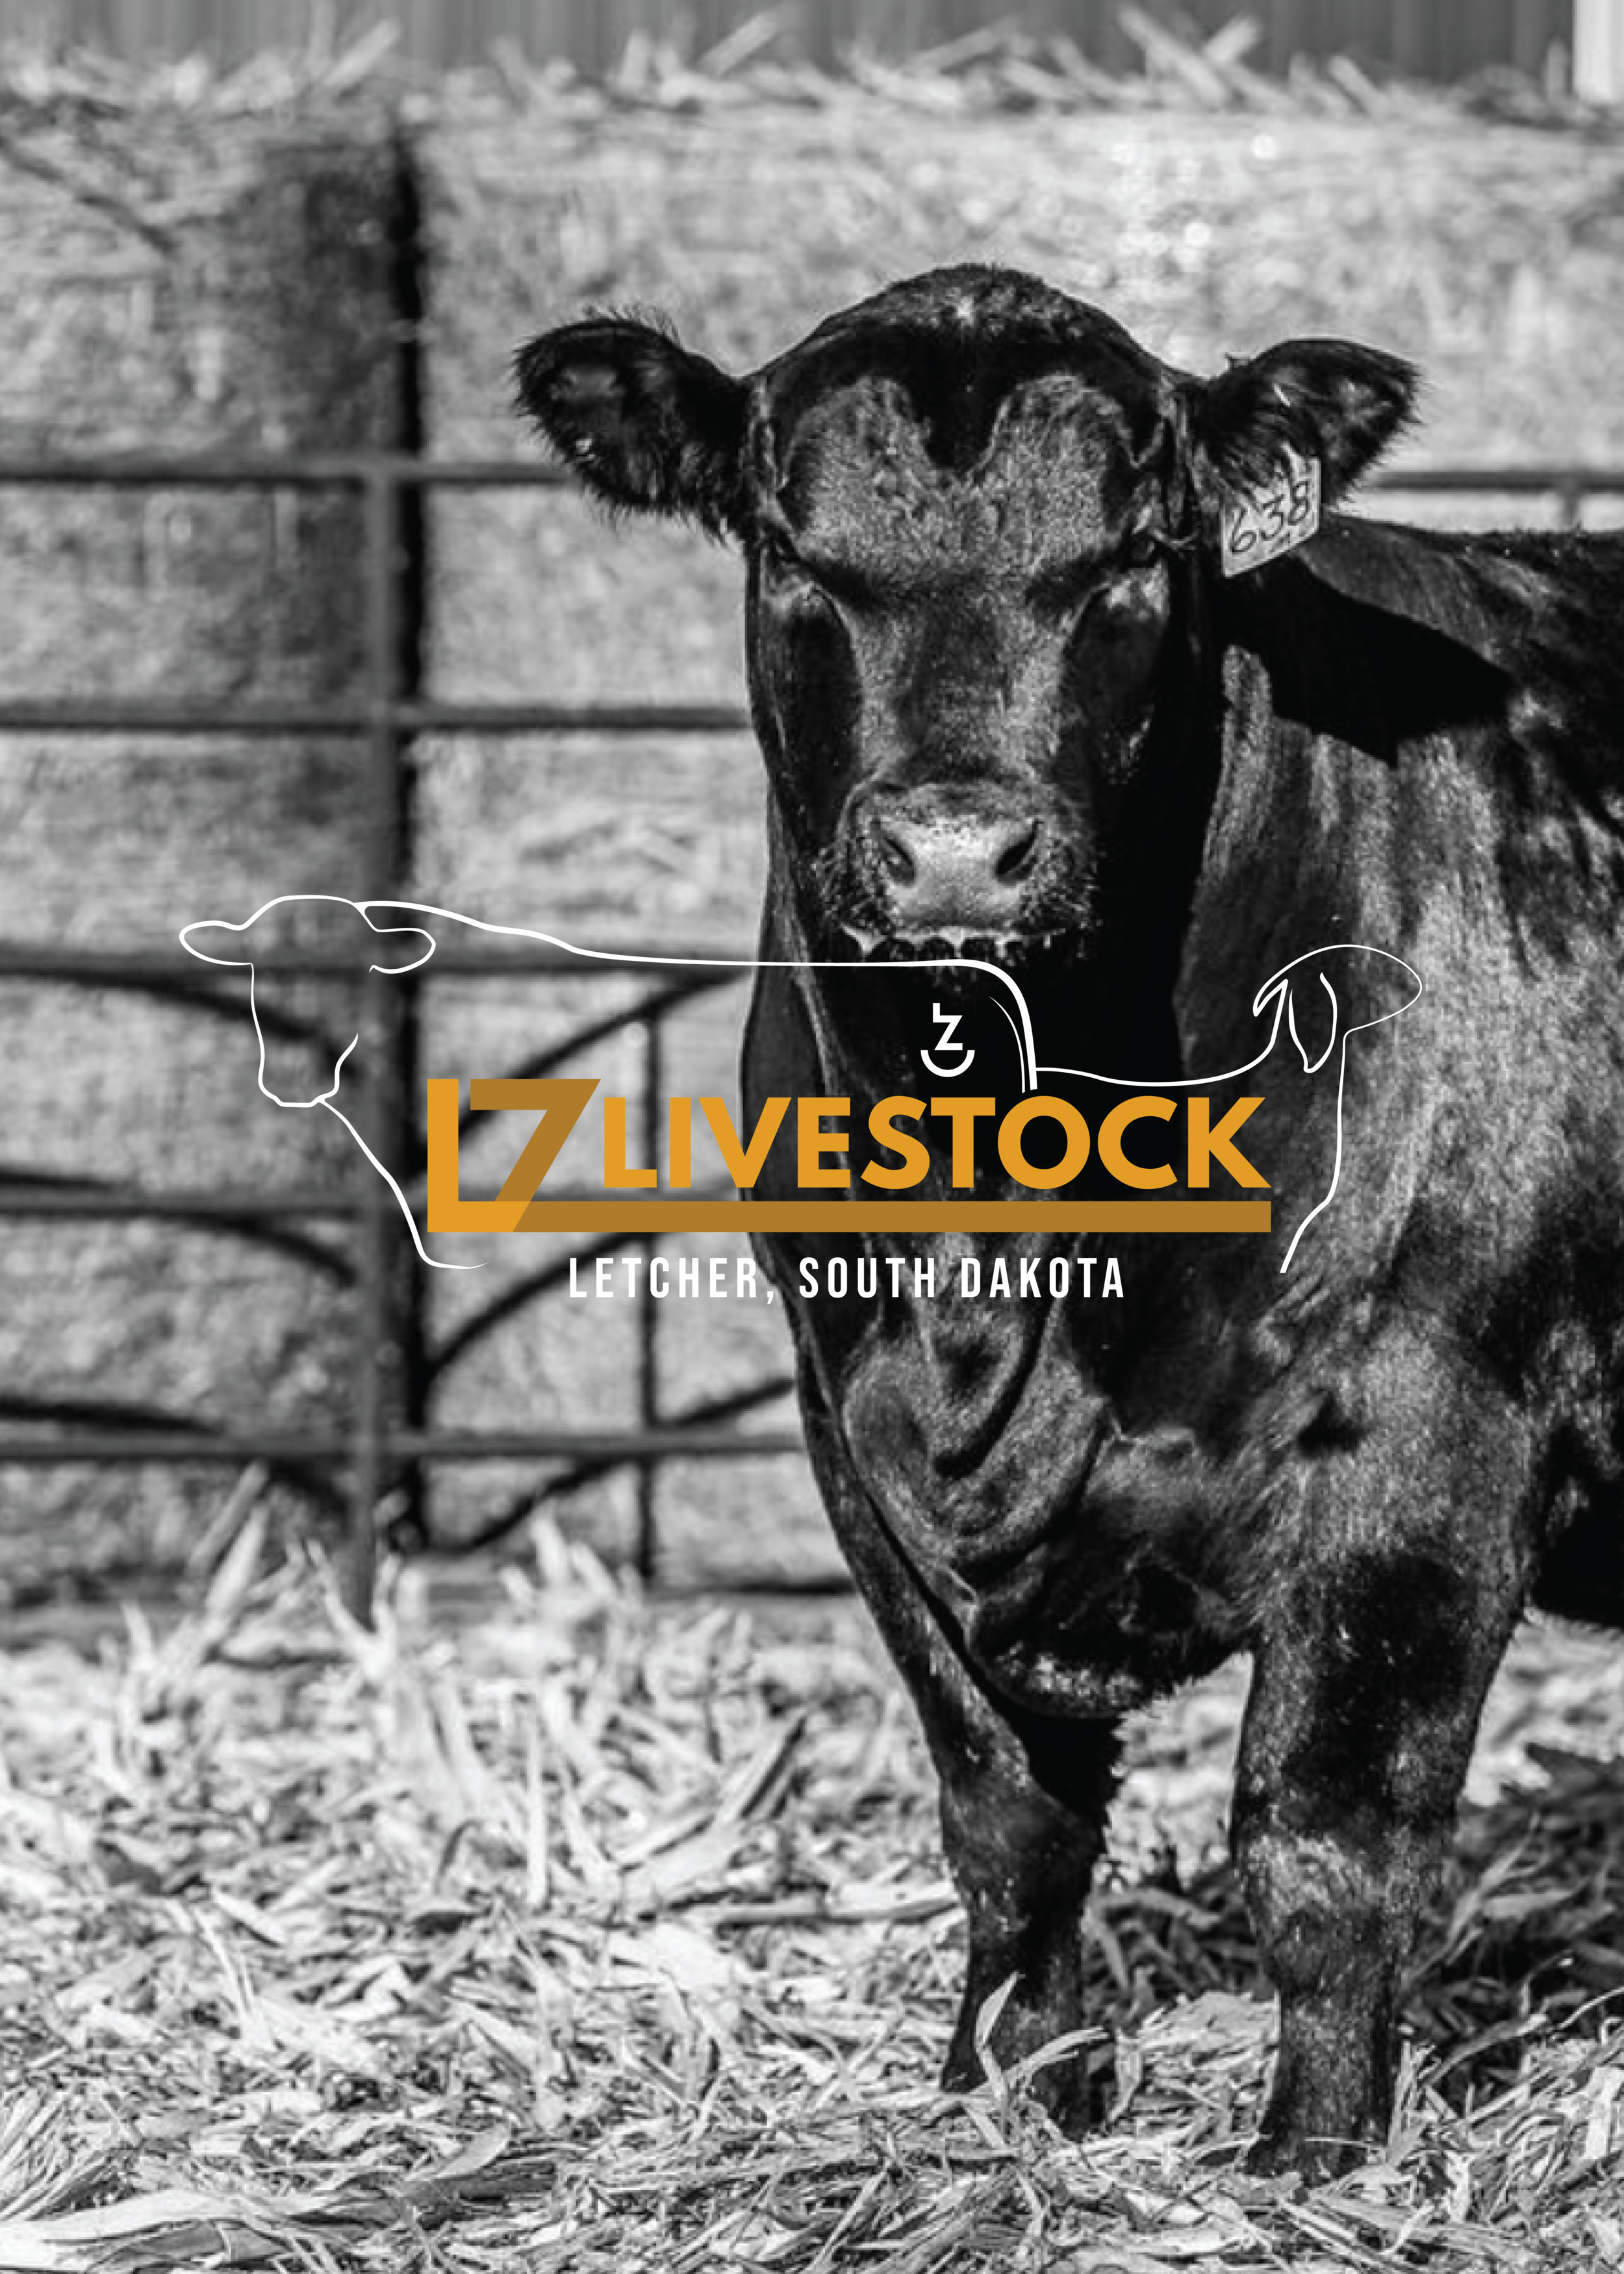 LZ Livestock Branding.png